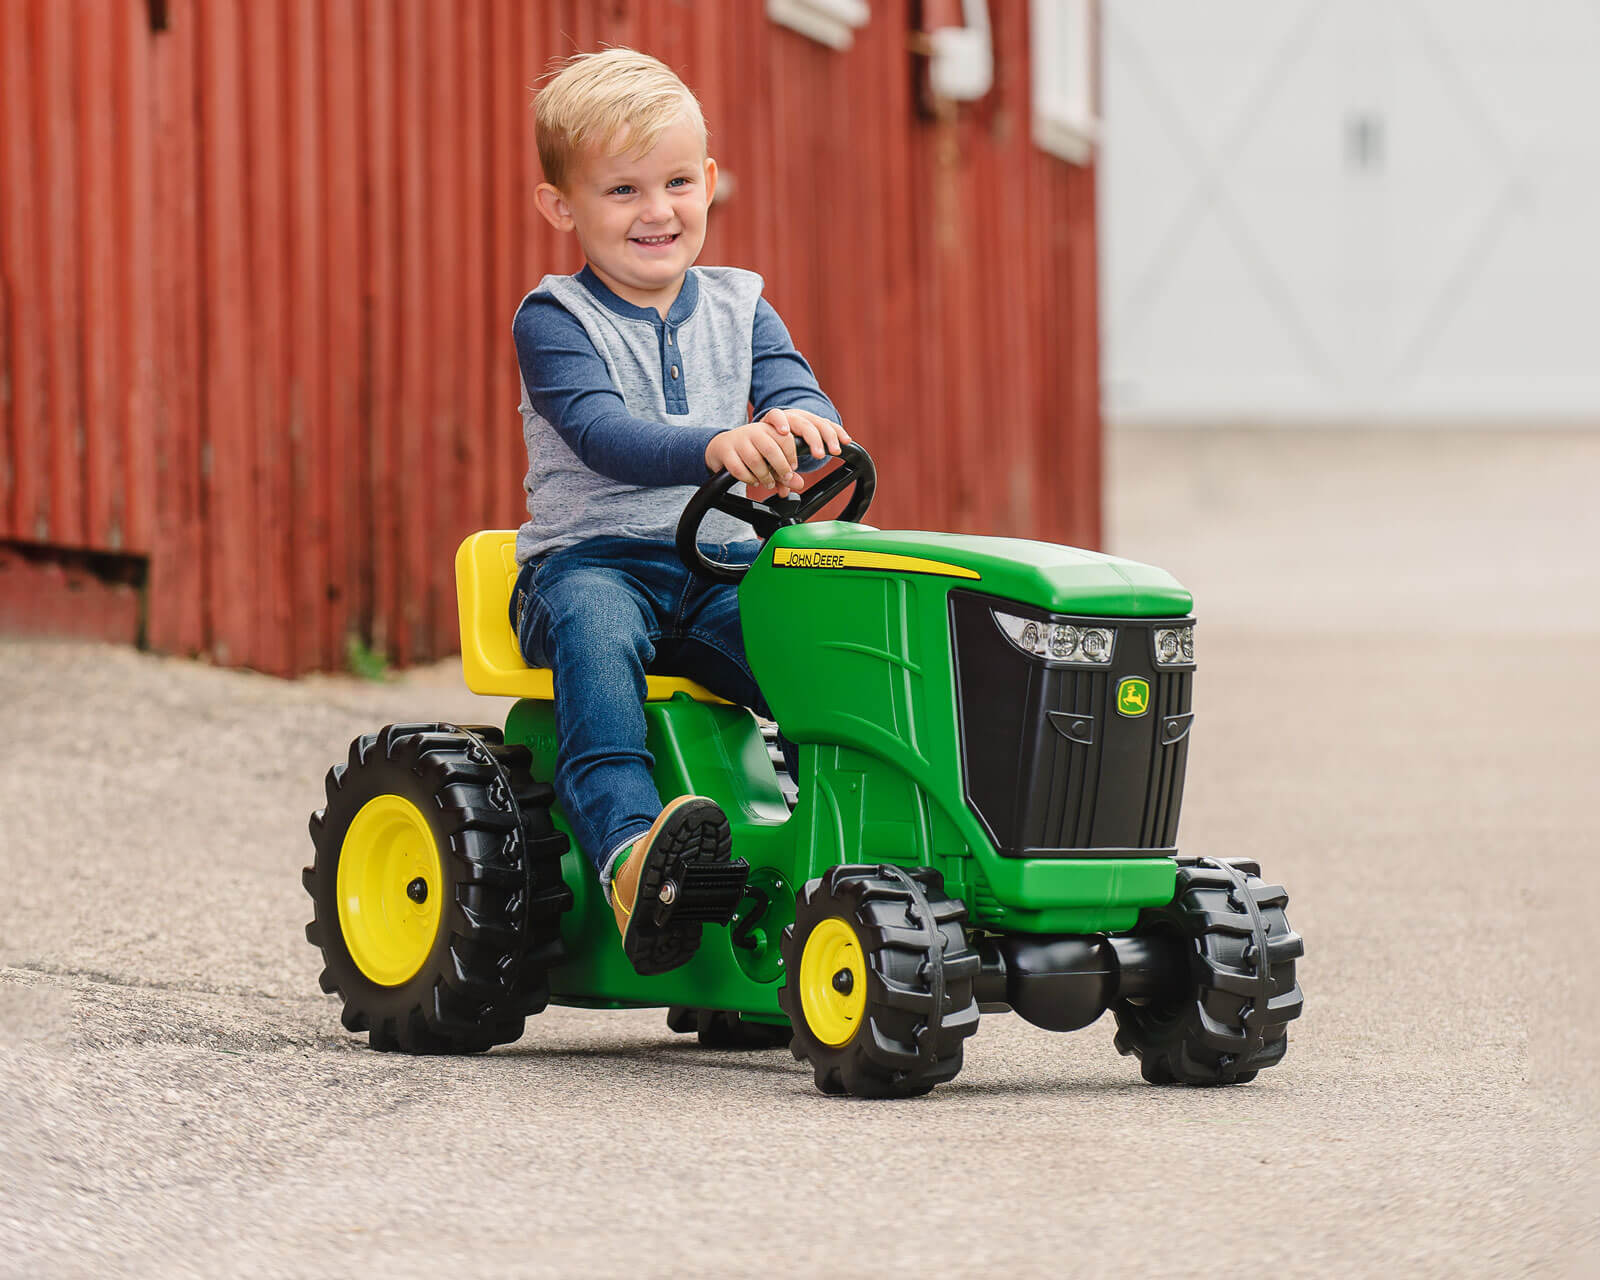 Farm Toys, Toy Tractors & Toy Barns at FarmToys.com